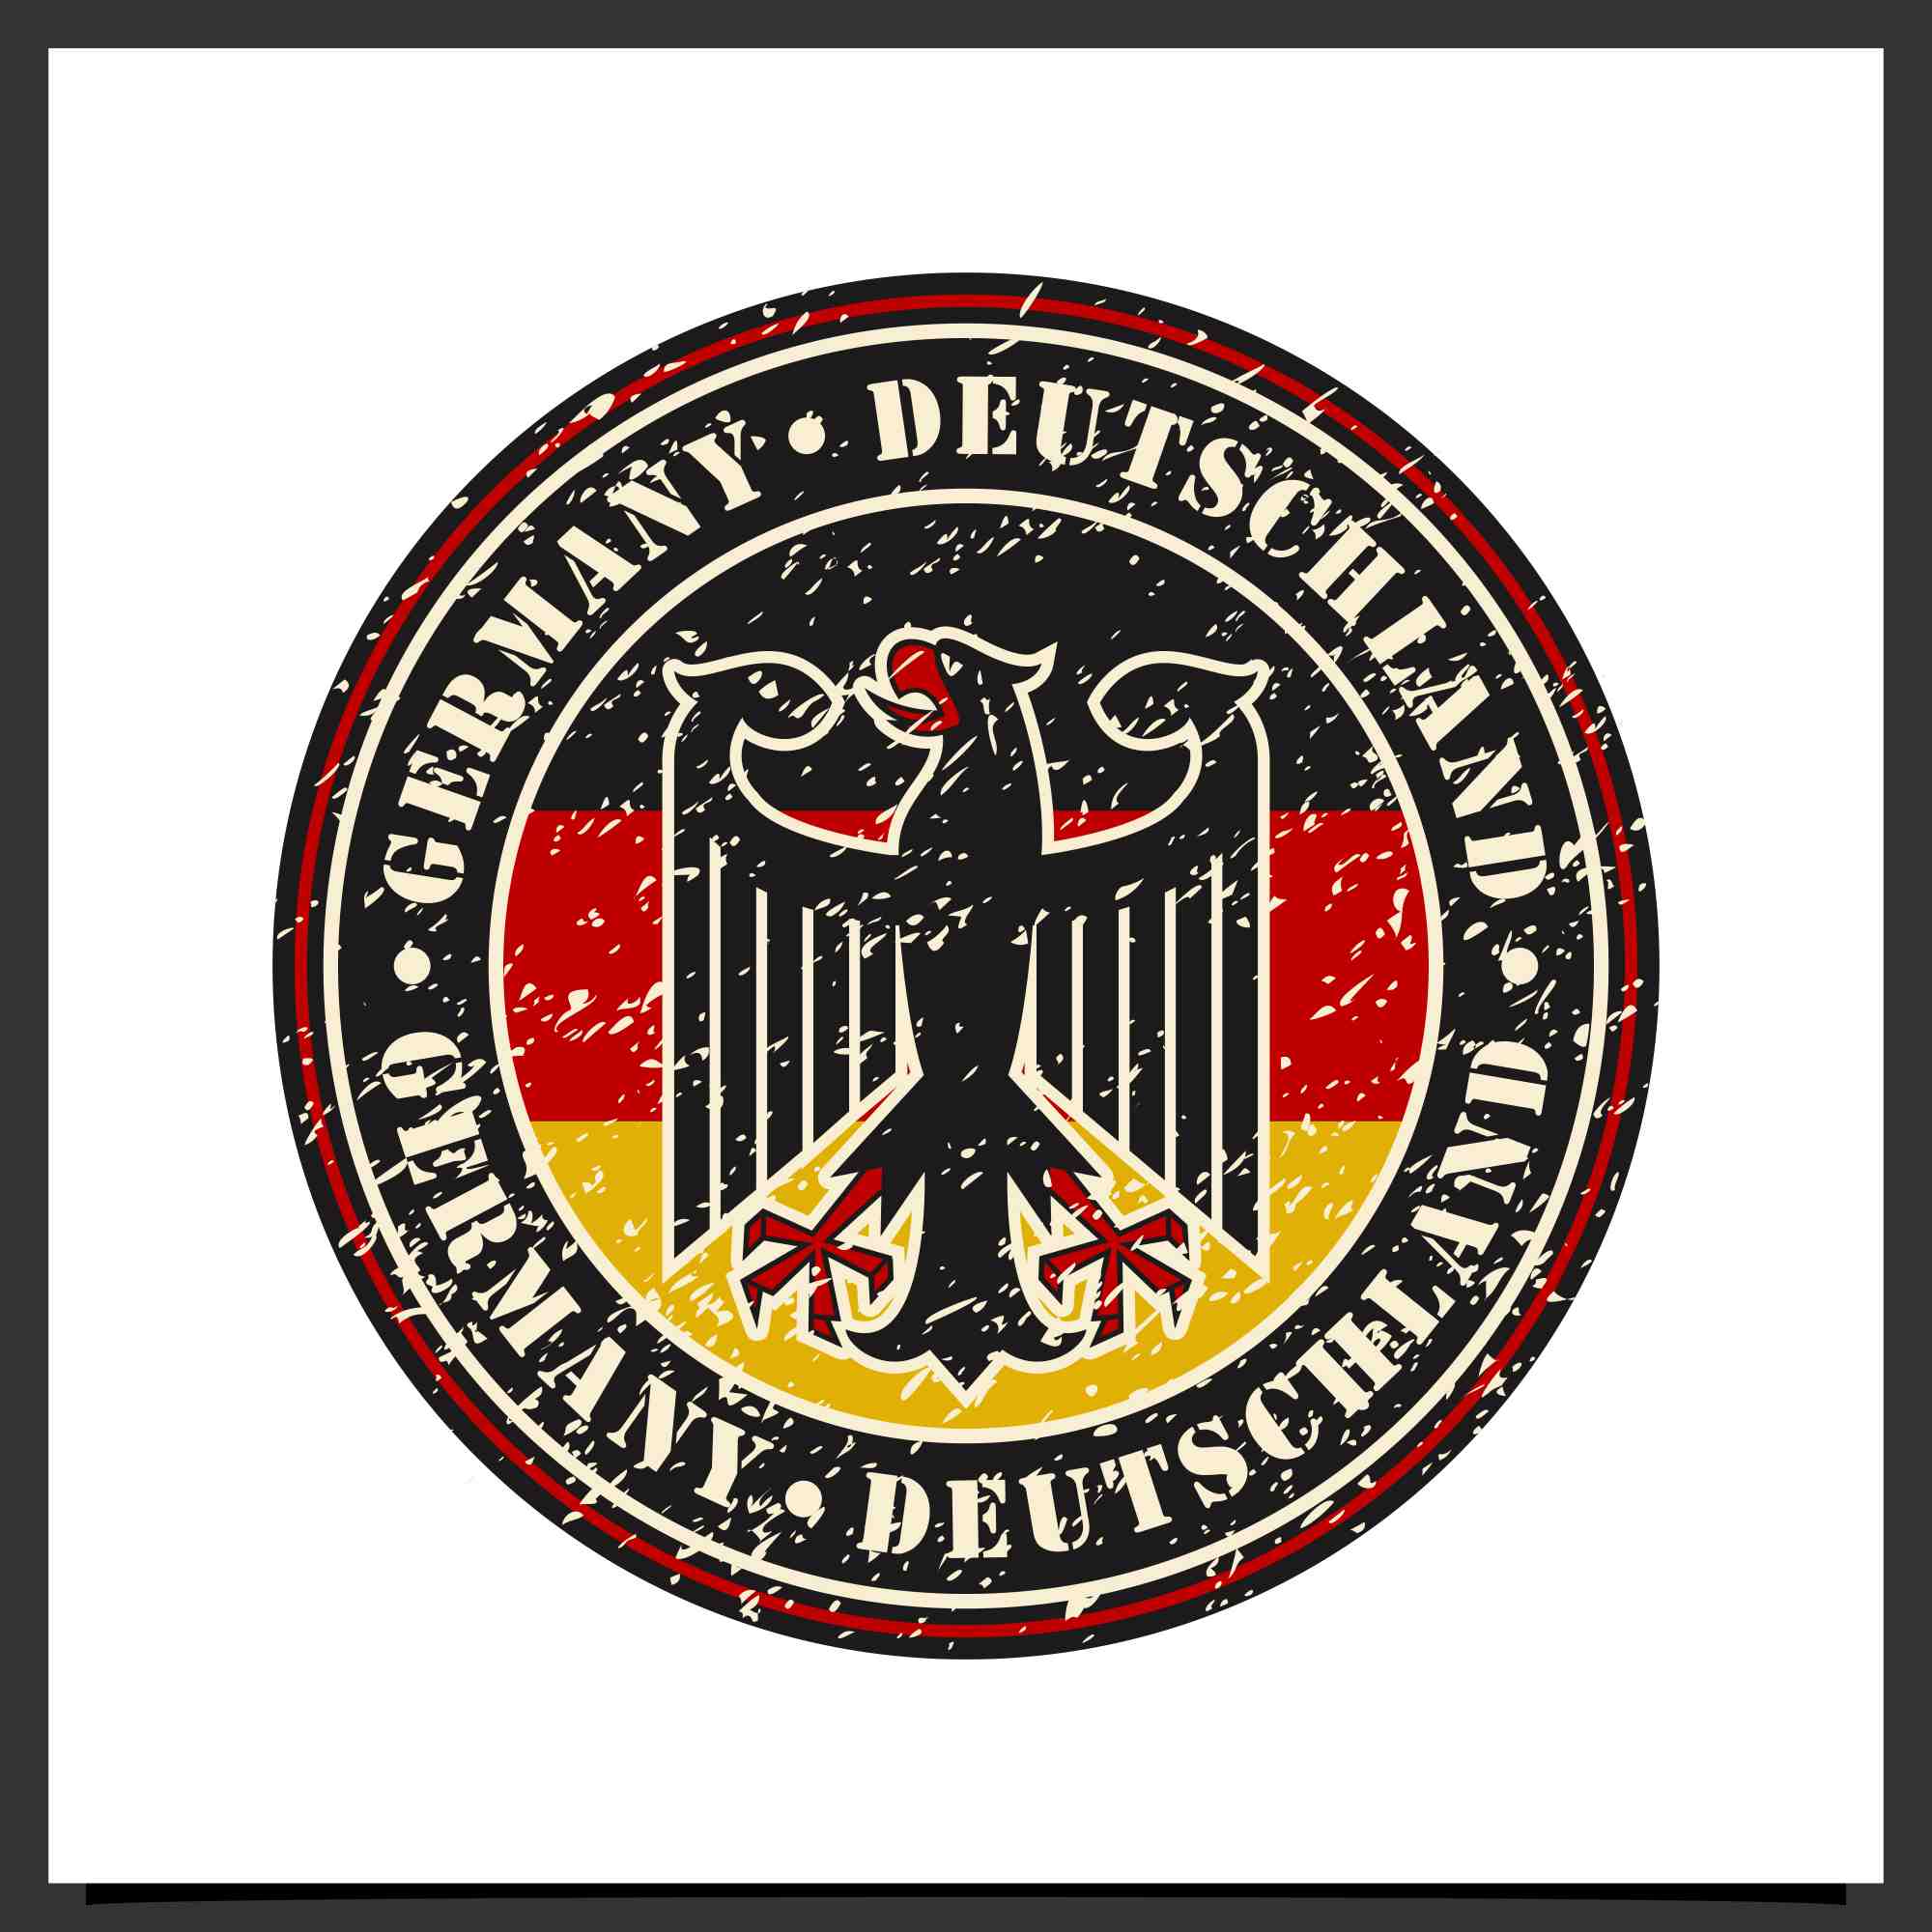 Germany deutshland logo design collection - $4 preview image.